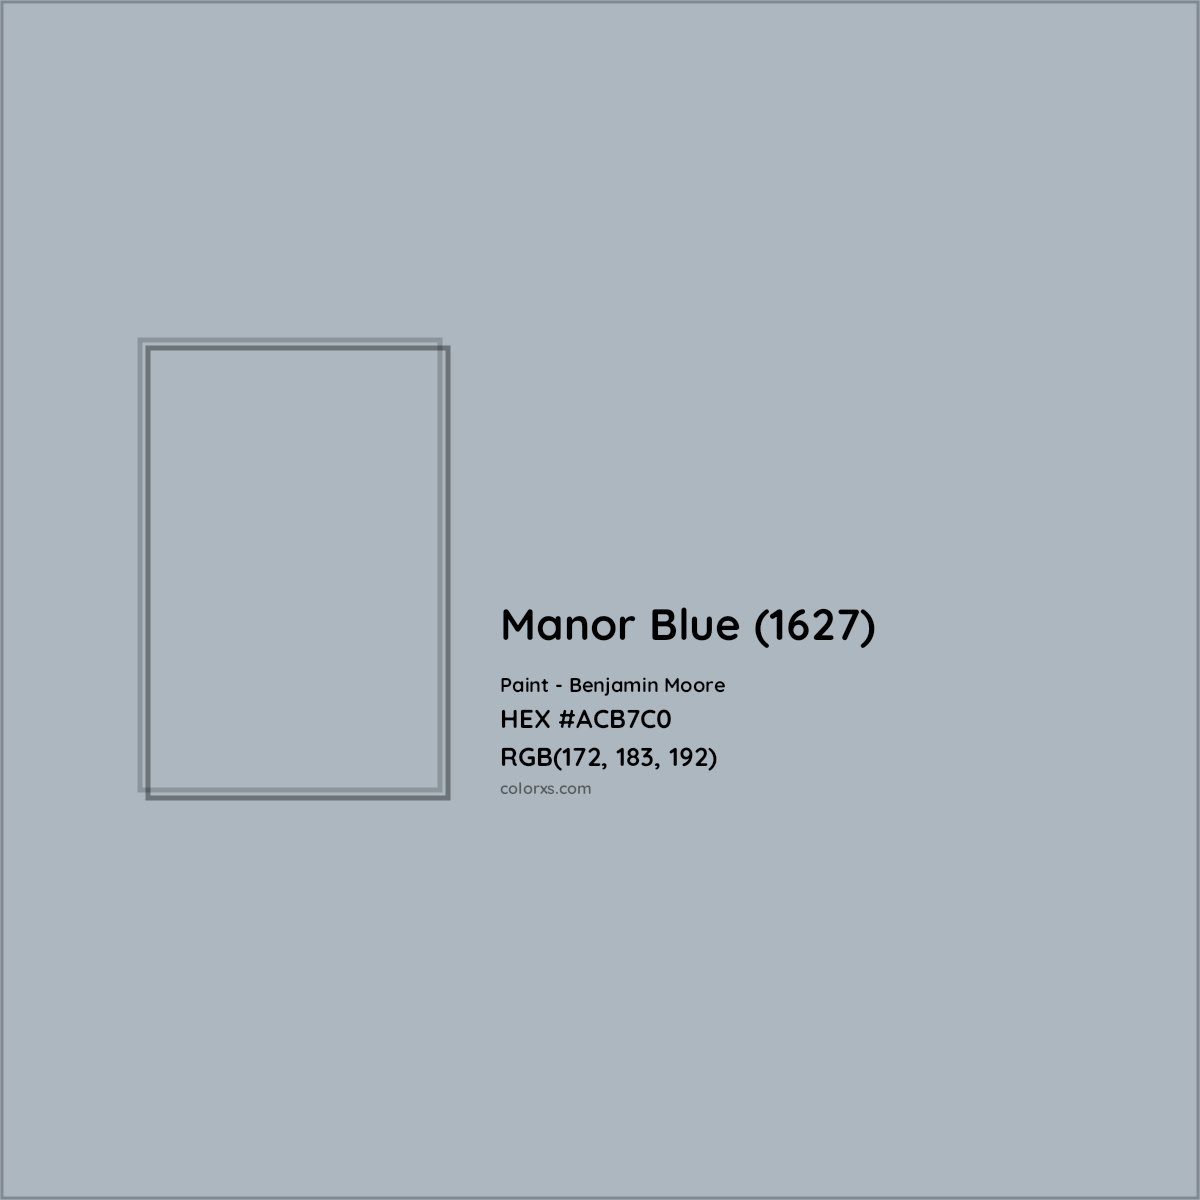 HEX #ACB7C0 Manor Blue (1627) Paint Benjamin Moore - Color Code